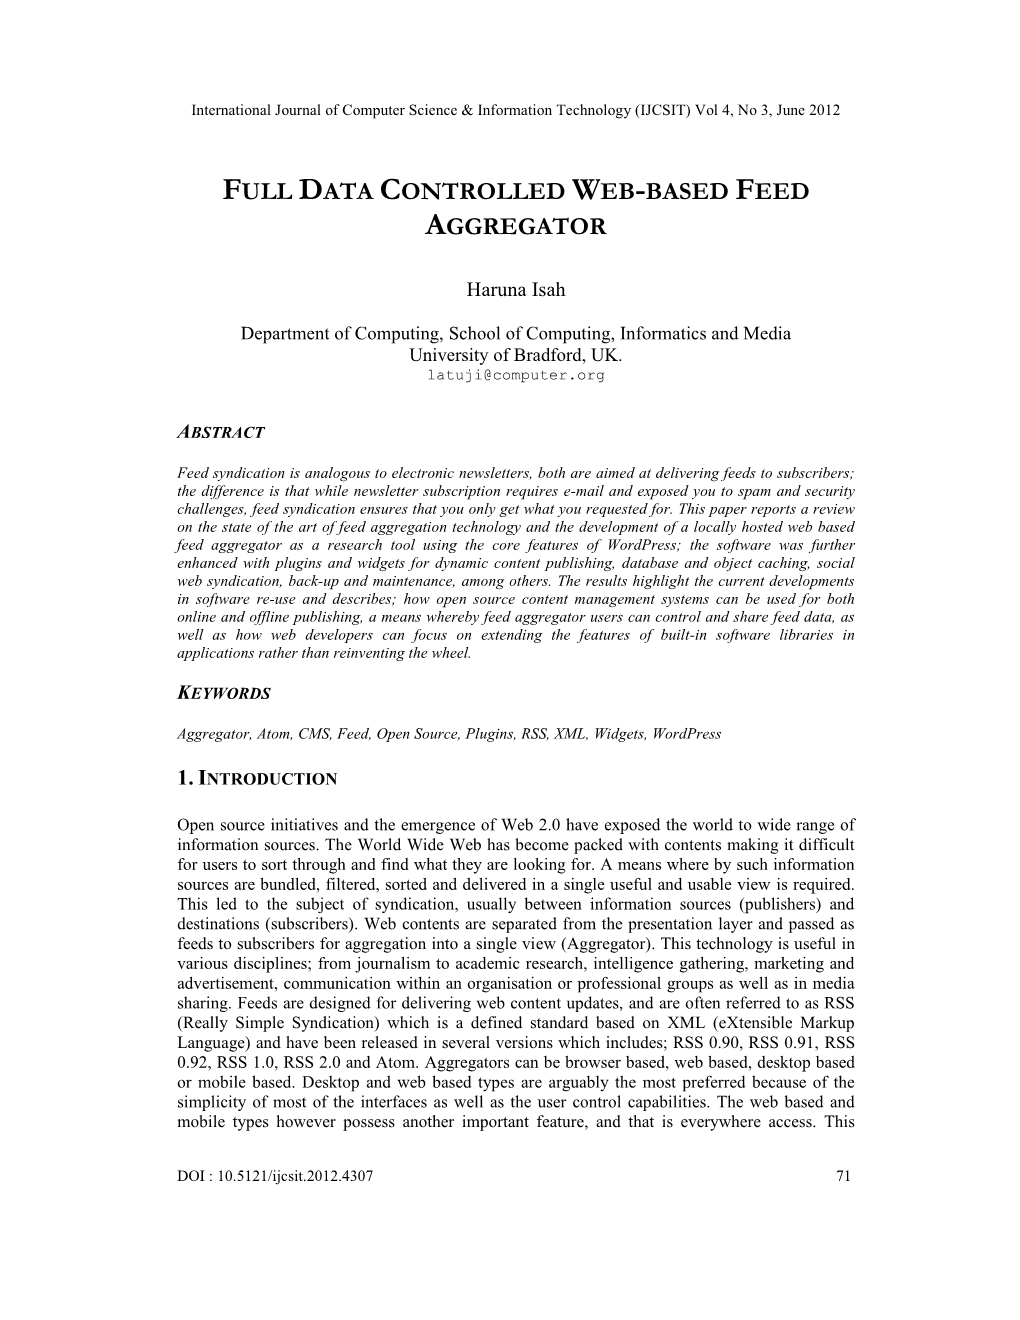 Full Data Controlled Web-Based Feed Aggregator